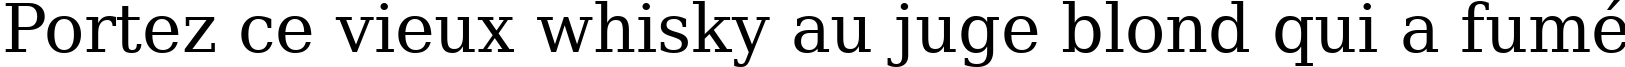 Пример написания шрифтом ae_Metal текста на французском